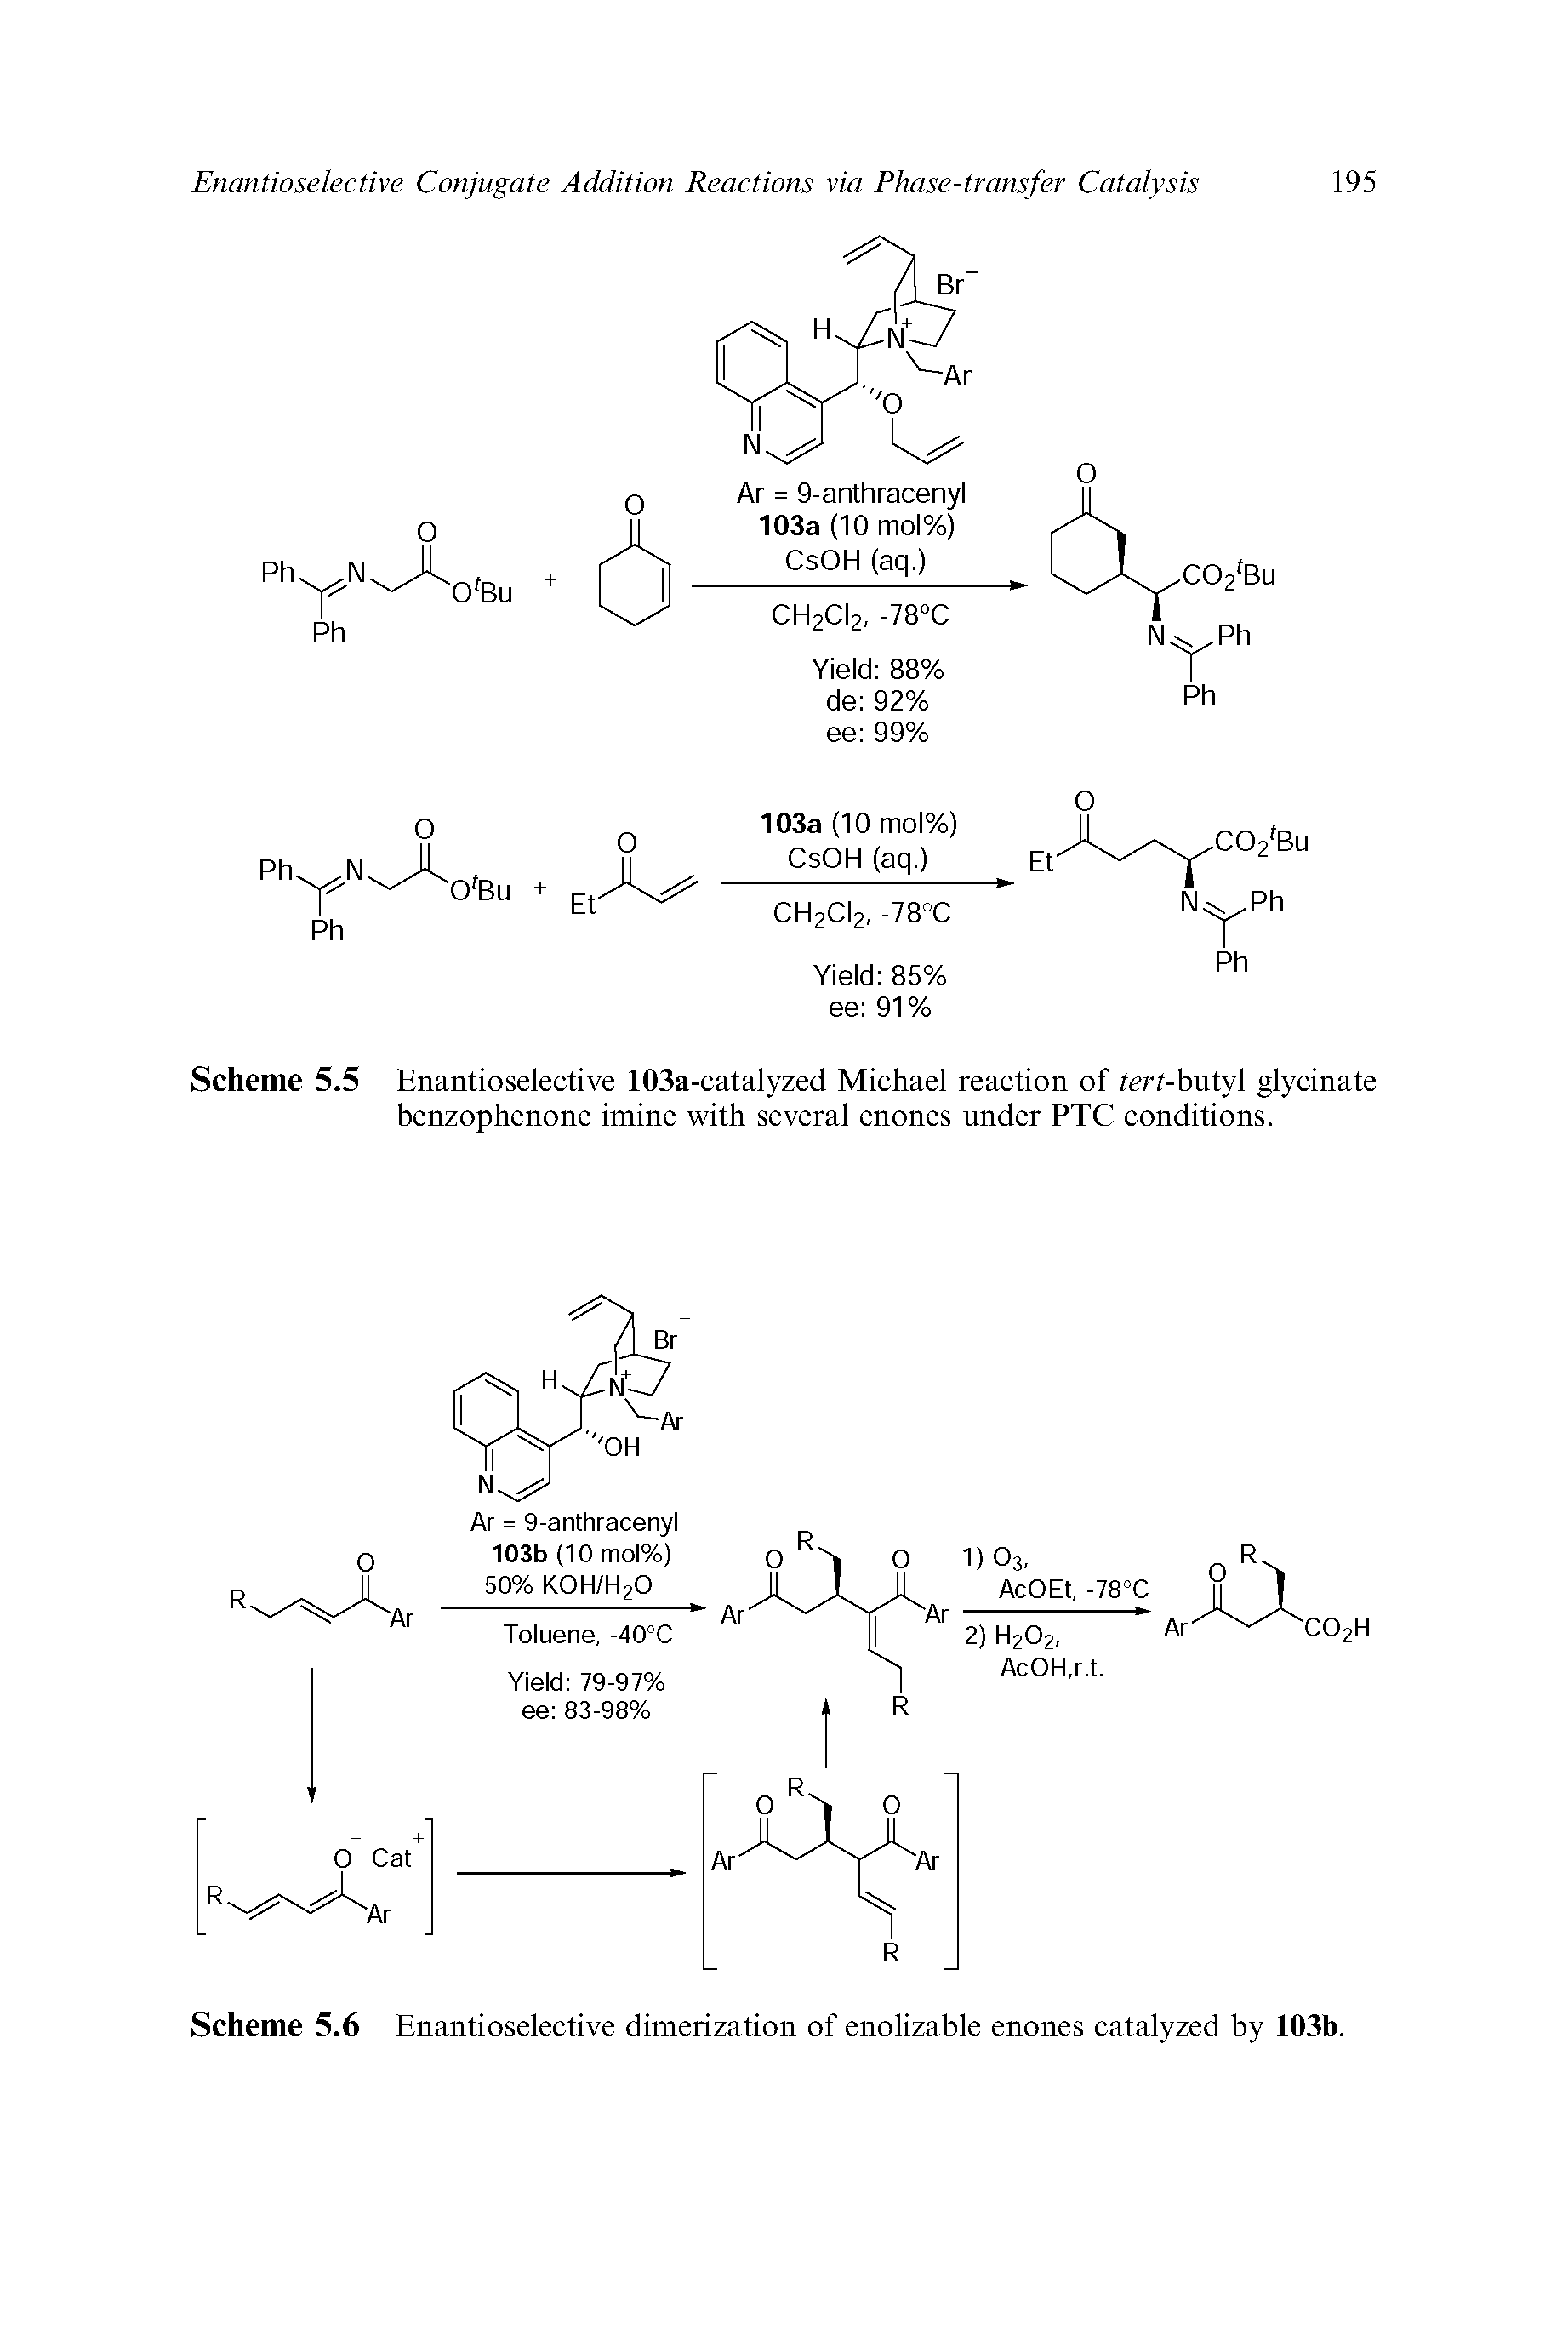 Scheme 5.6 Enantioselective dimerization of enolizable enones catalyzed by 103b.